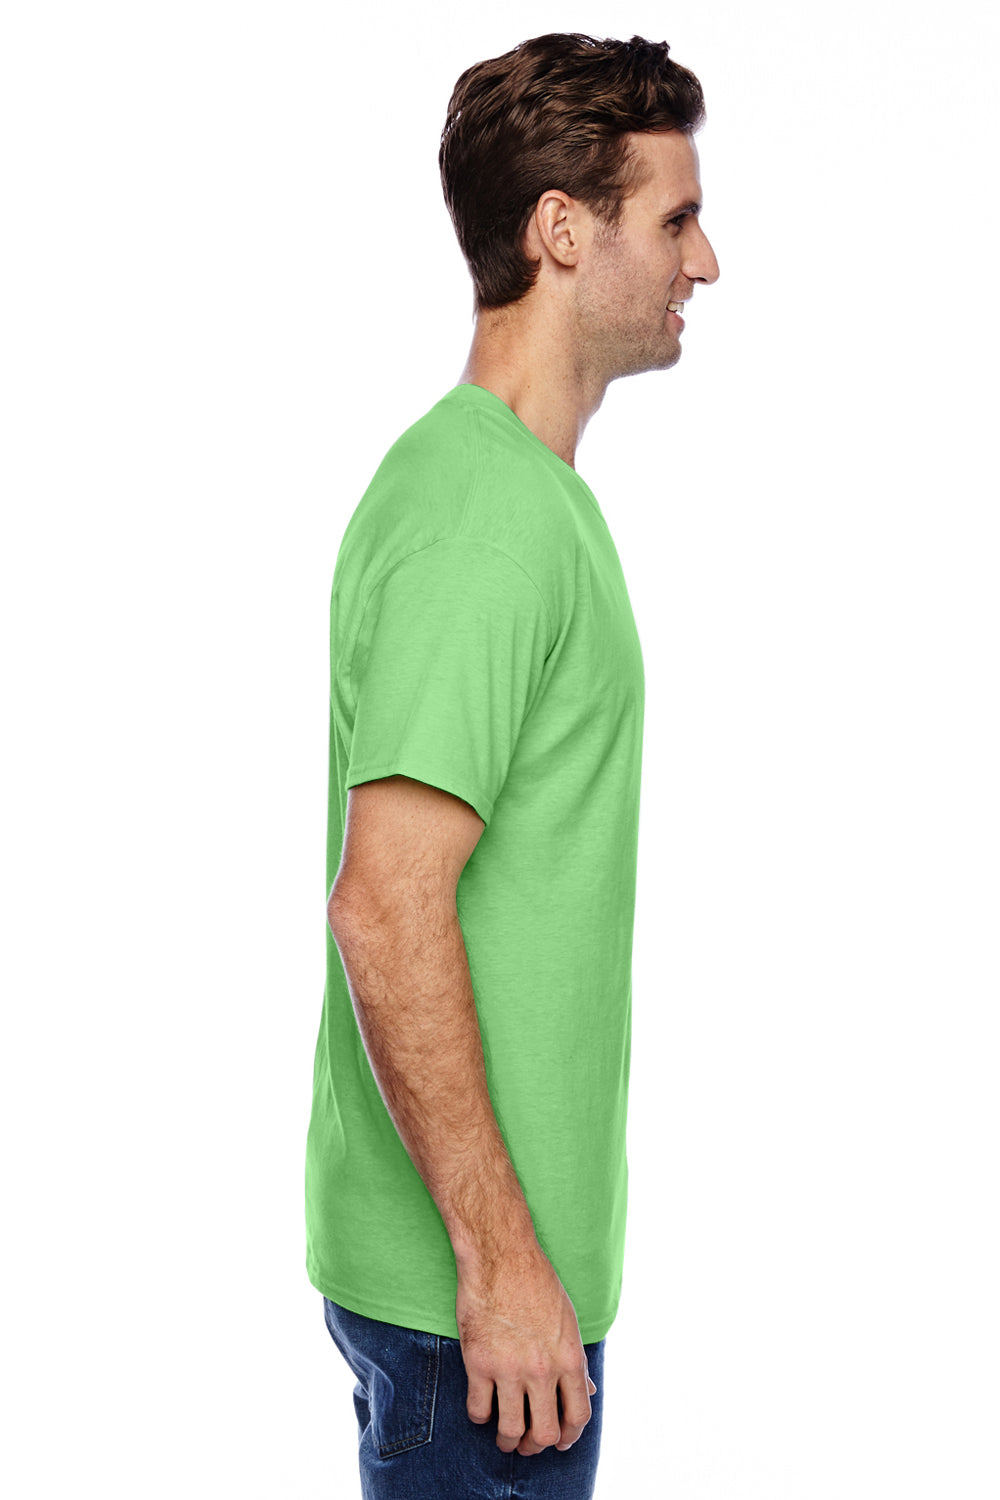 Hanes P4200 Mens X-Temp Moisture Wicking Short Sleeve Crewneck T-Shirt Heather Neon Lime Green Side